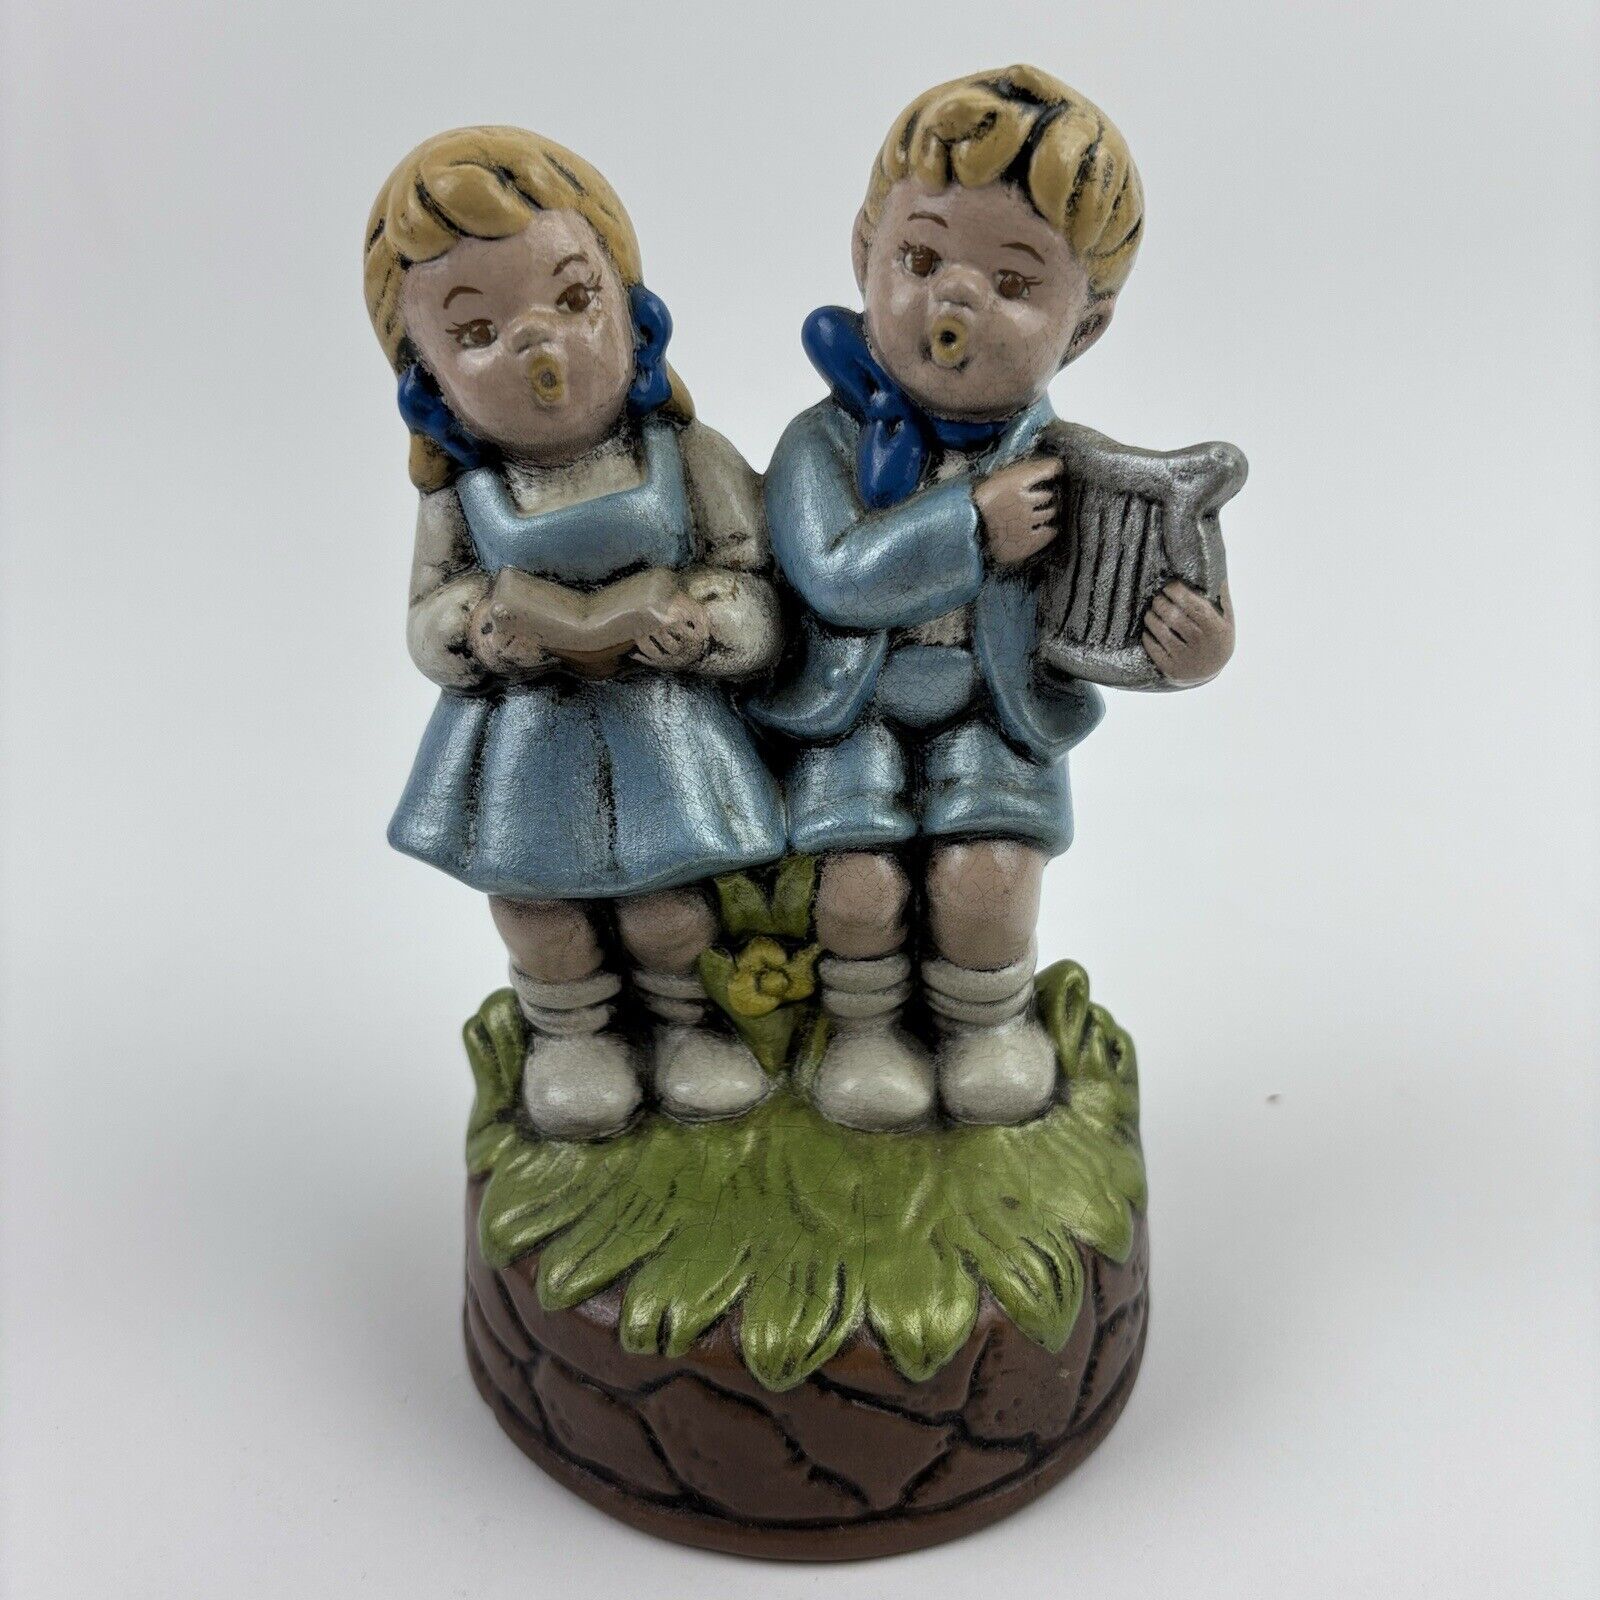 Vintage Hummel Style Porcelain Figurine Singing Girl And Boy With Harp 6”x4”